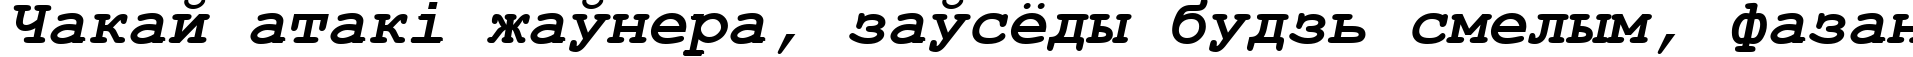 Пример написания шрифтом Courier New Bold Italic текста на белорусском